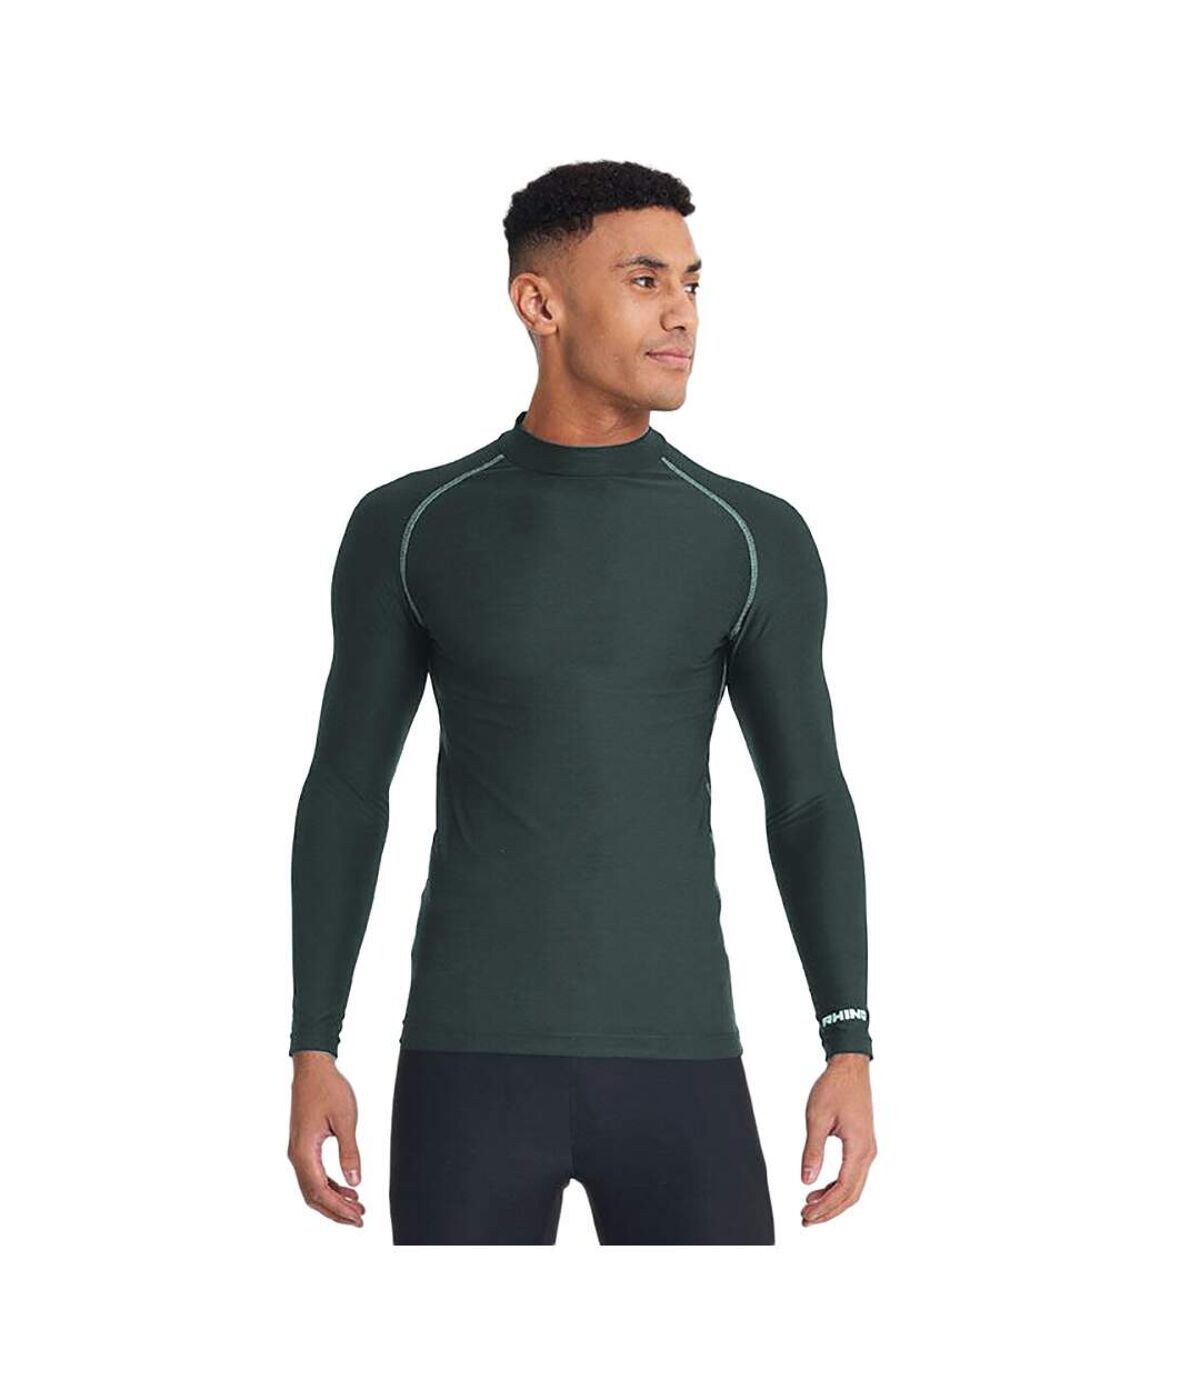 Rhino Mens Thermal Underwear Long Sleeve Base Layer Vest Top (Bottle Green)